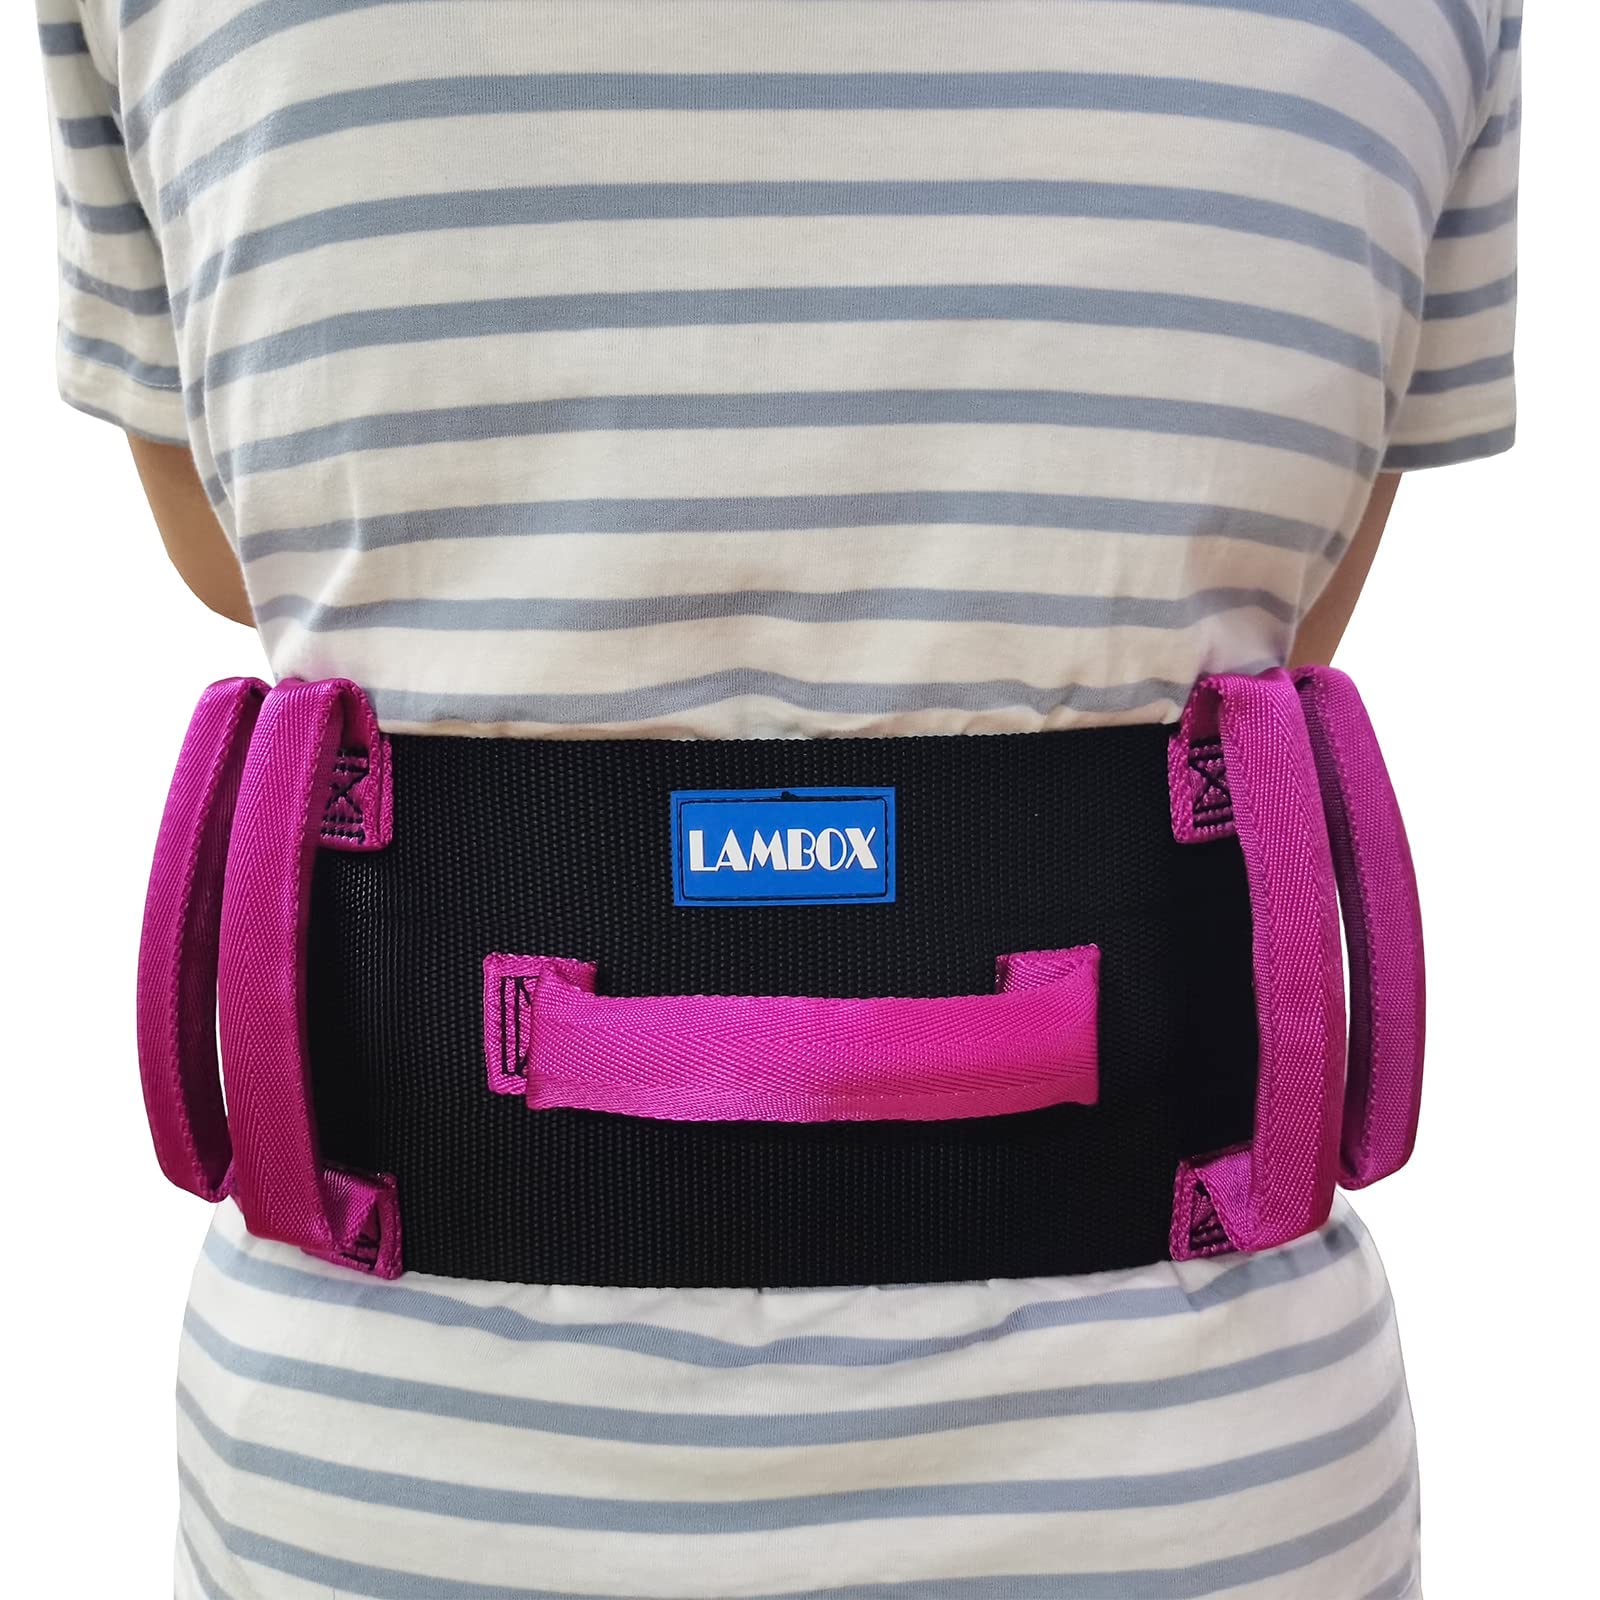 LAMBOX Transfer Walking Gait Belt with 7 Nylon Padded Handles